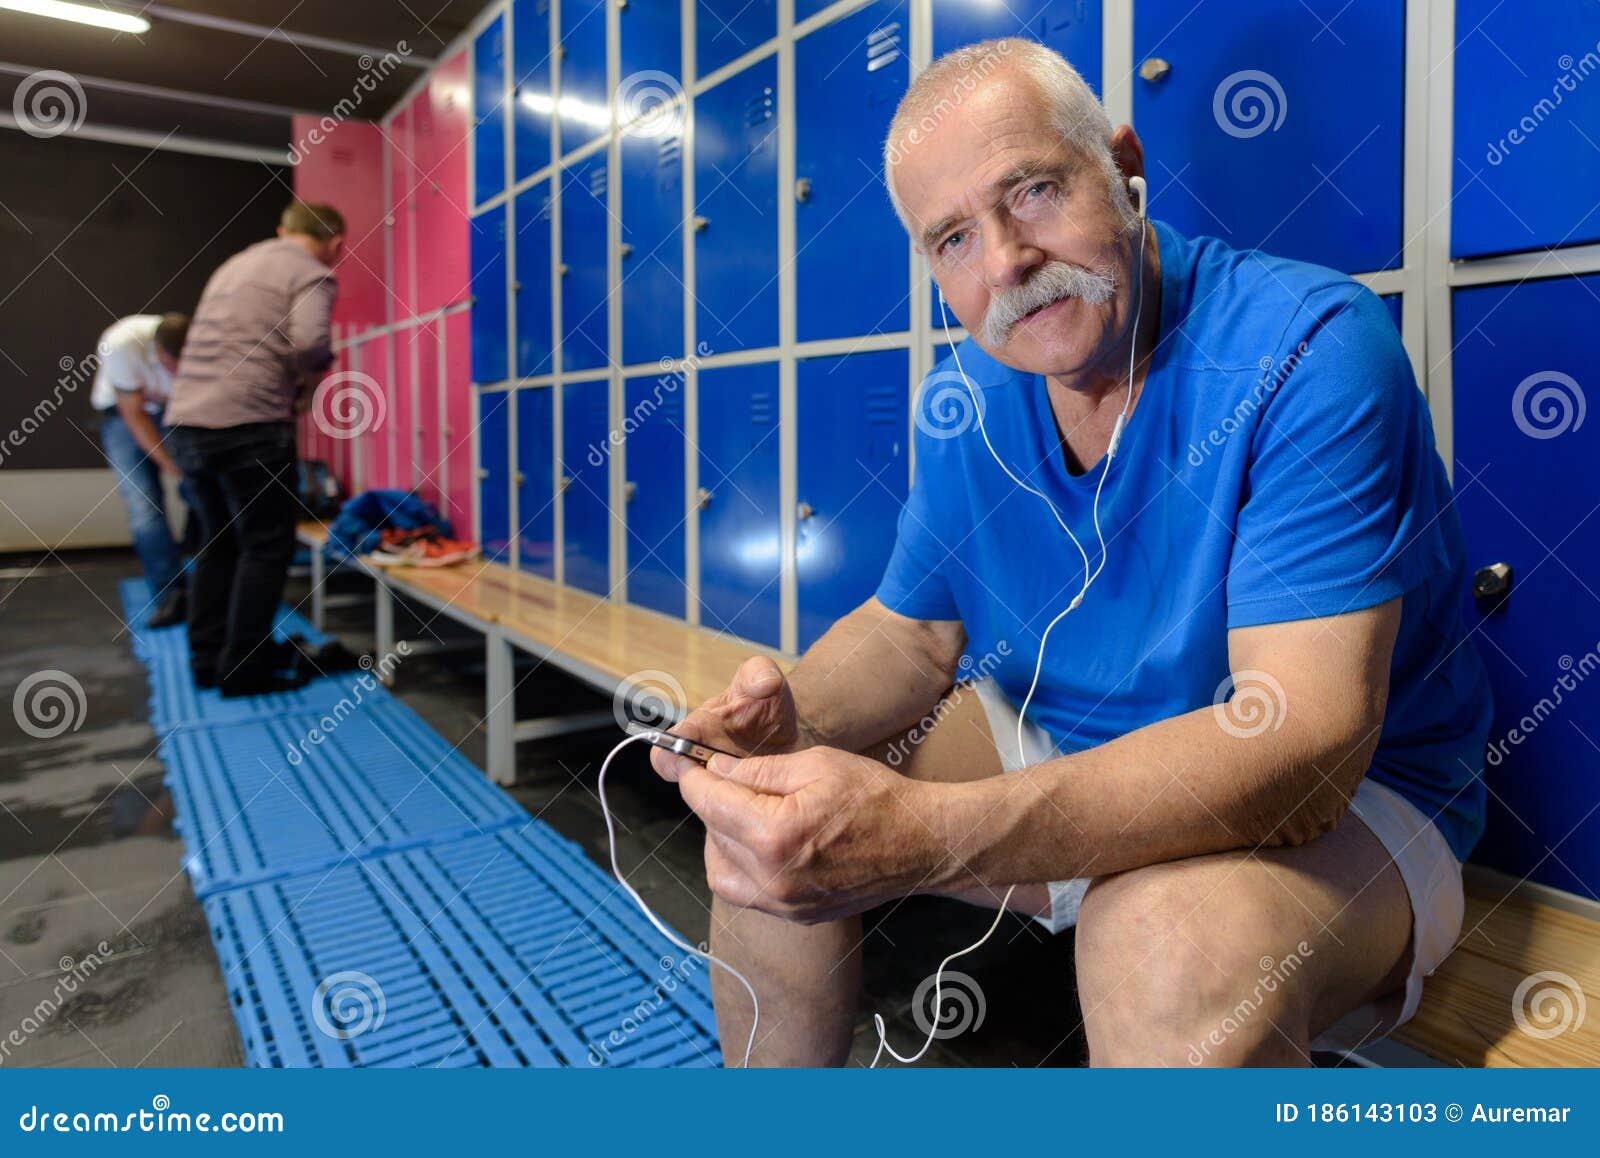 Portrait Senior Man In Locker Room Stock Image Image Of Portrait